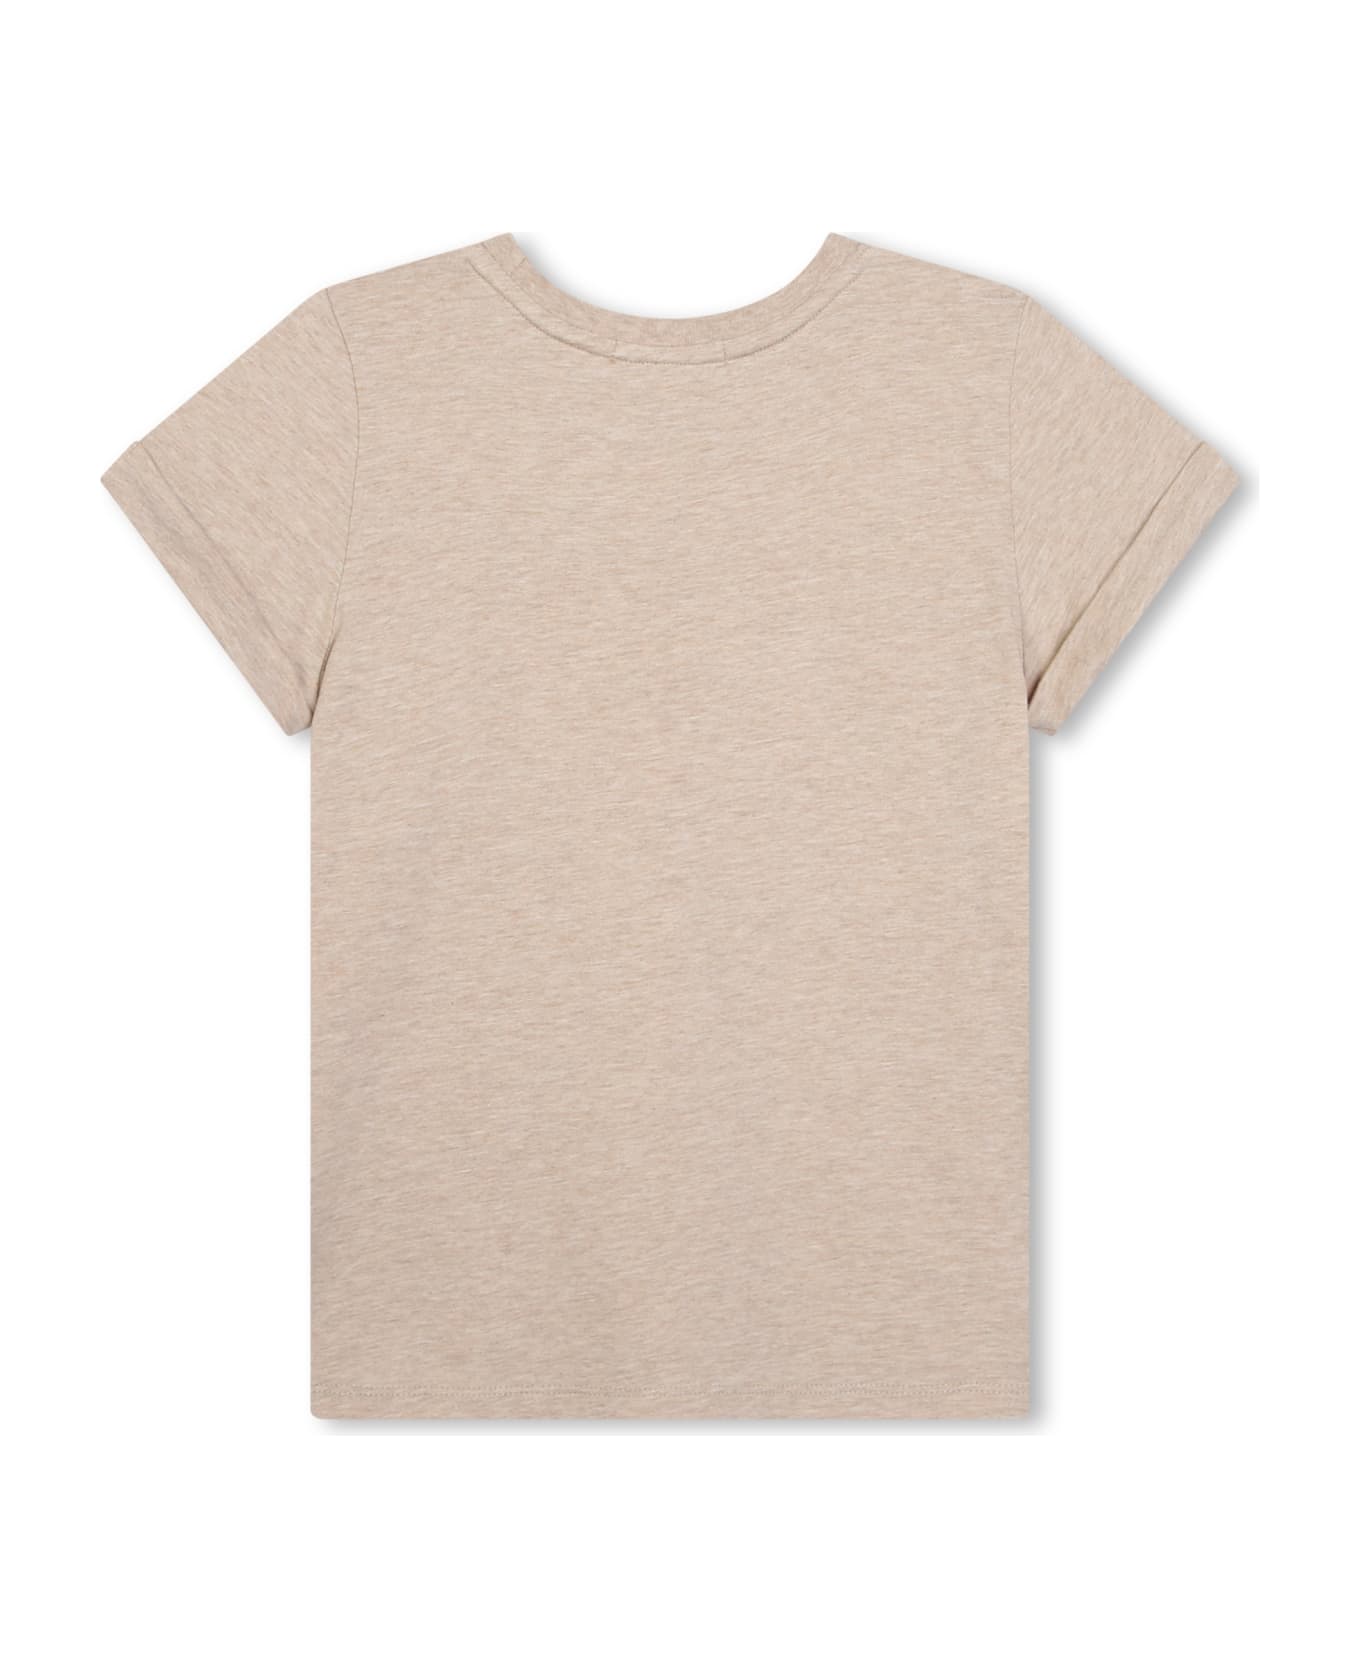 Chloé T-shirt With Print - Beige